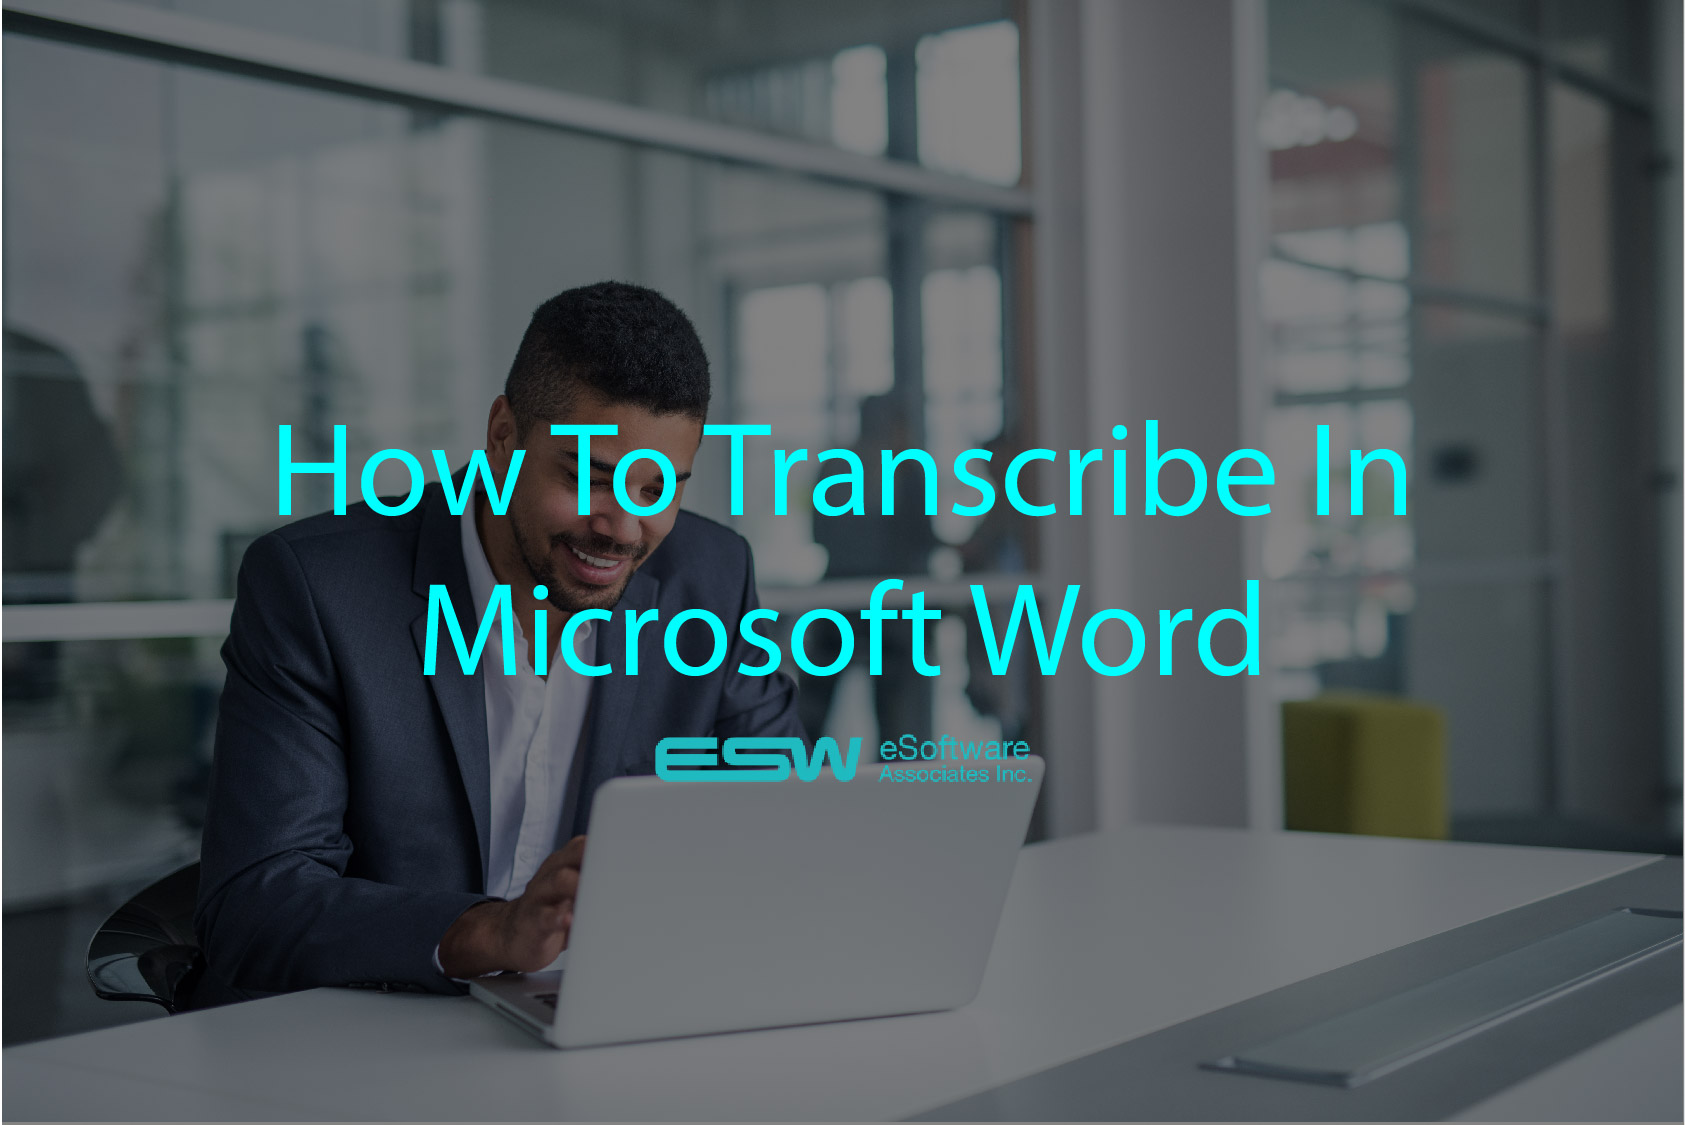 Transcribe in Microsoft Word